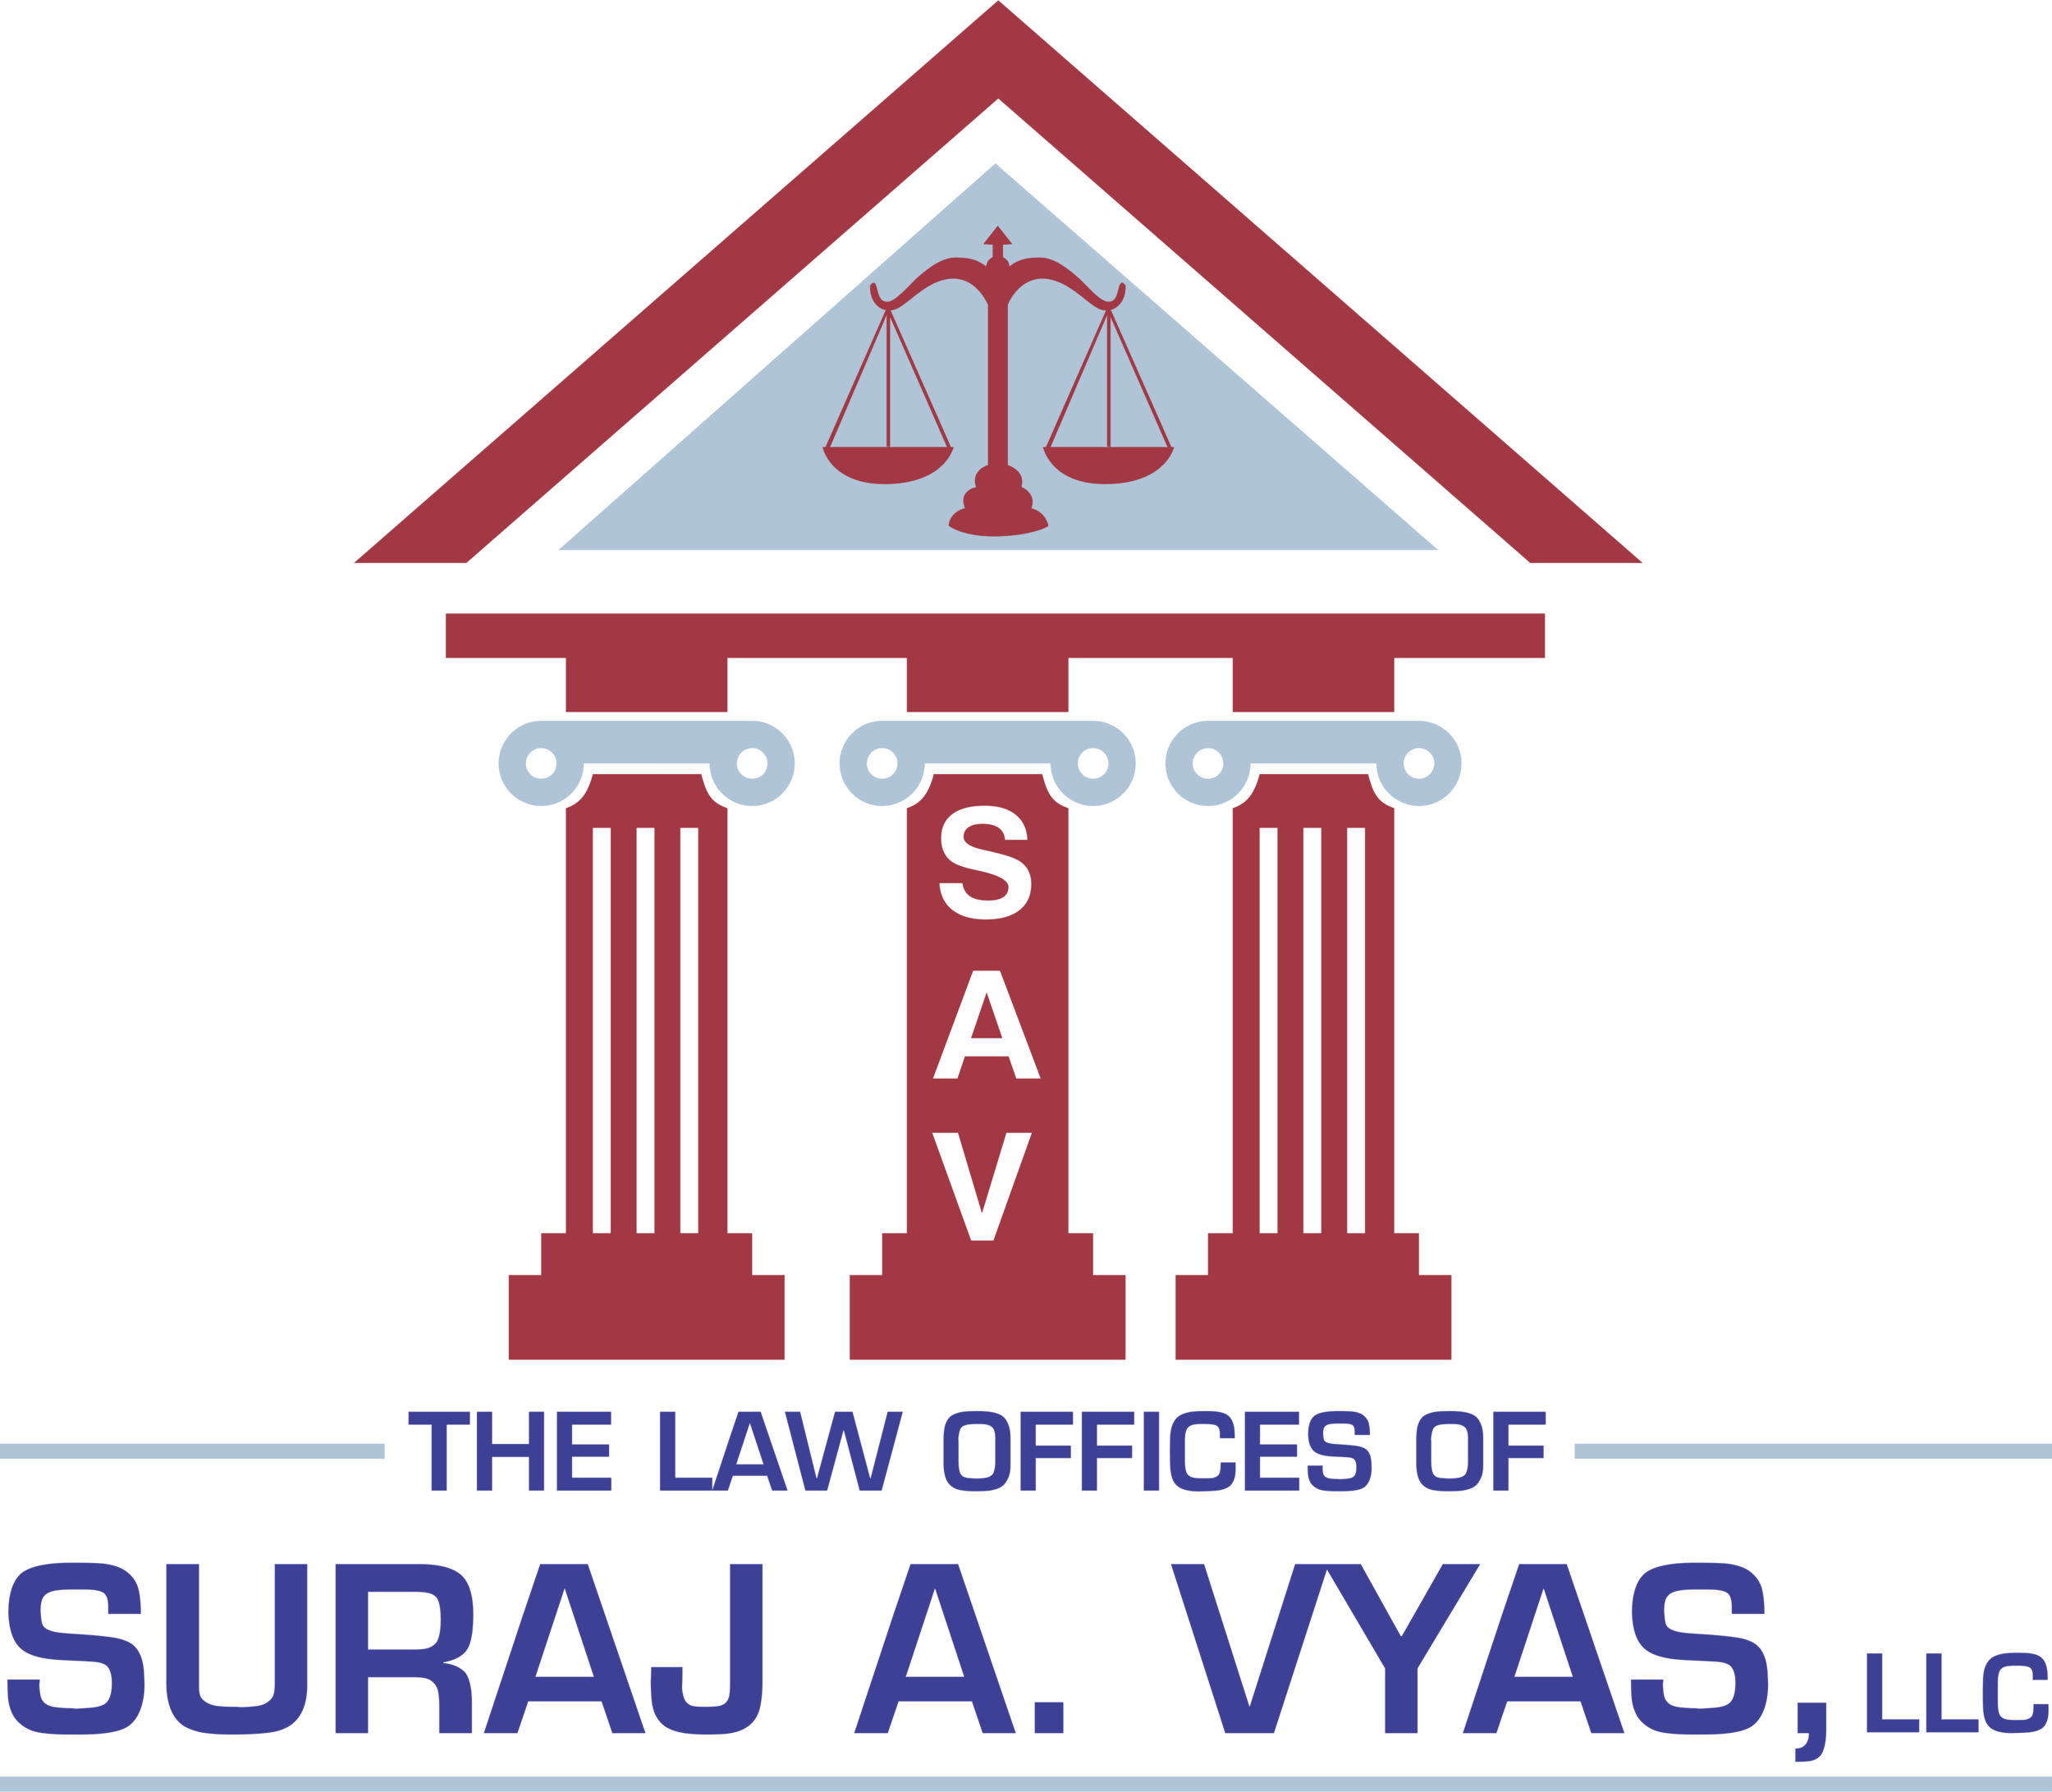 Maryland Volunteer Lawyers Service (MVLS) - Maryland Legal Services  Corporation